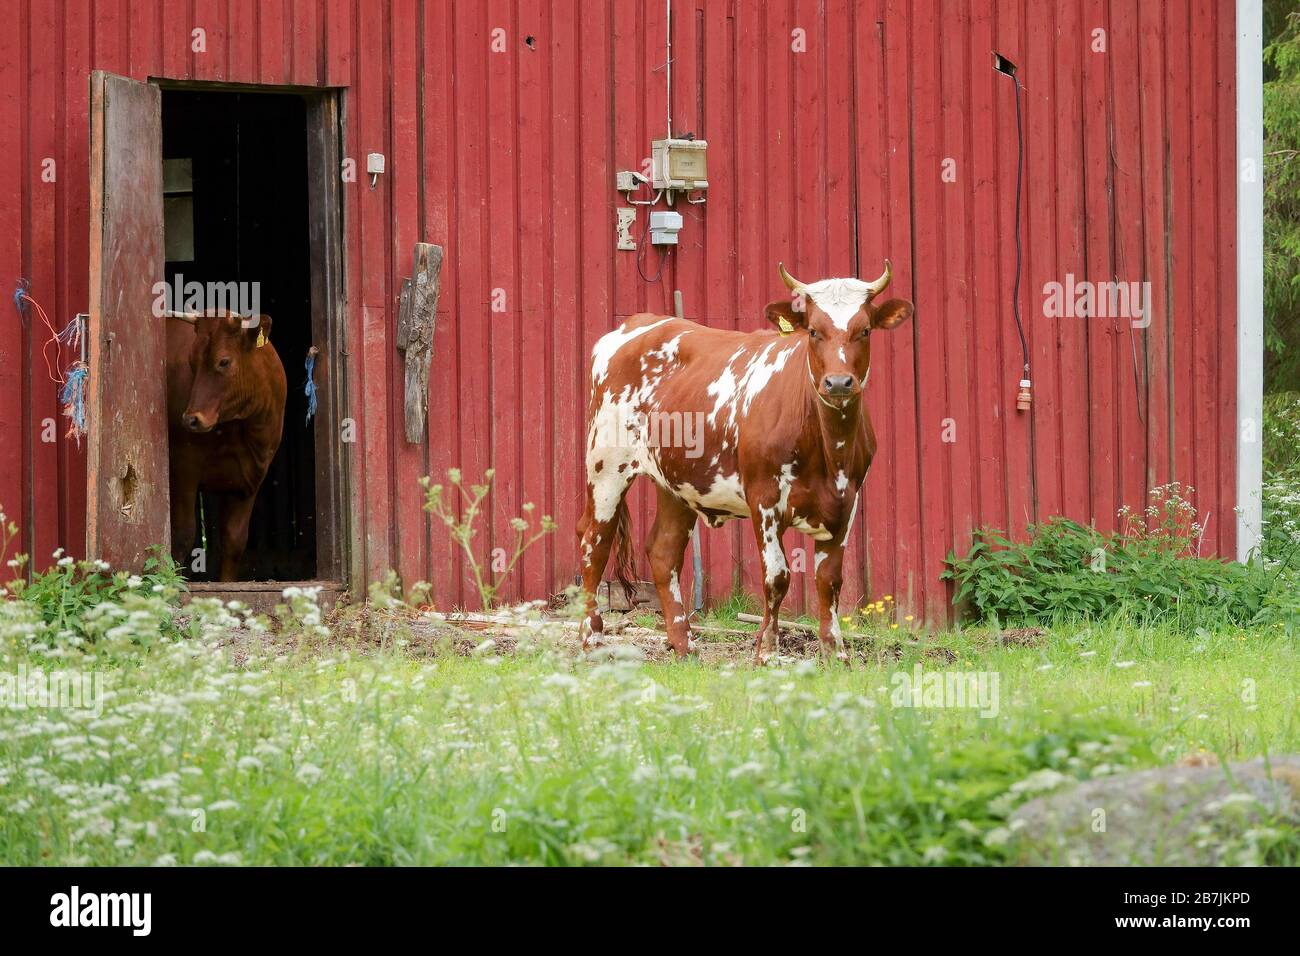 livestock Stock Photo